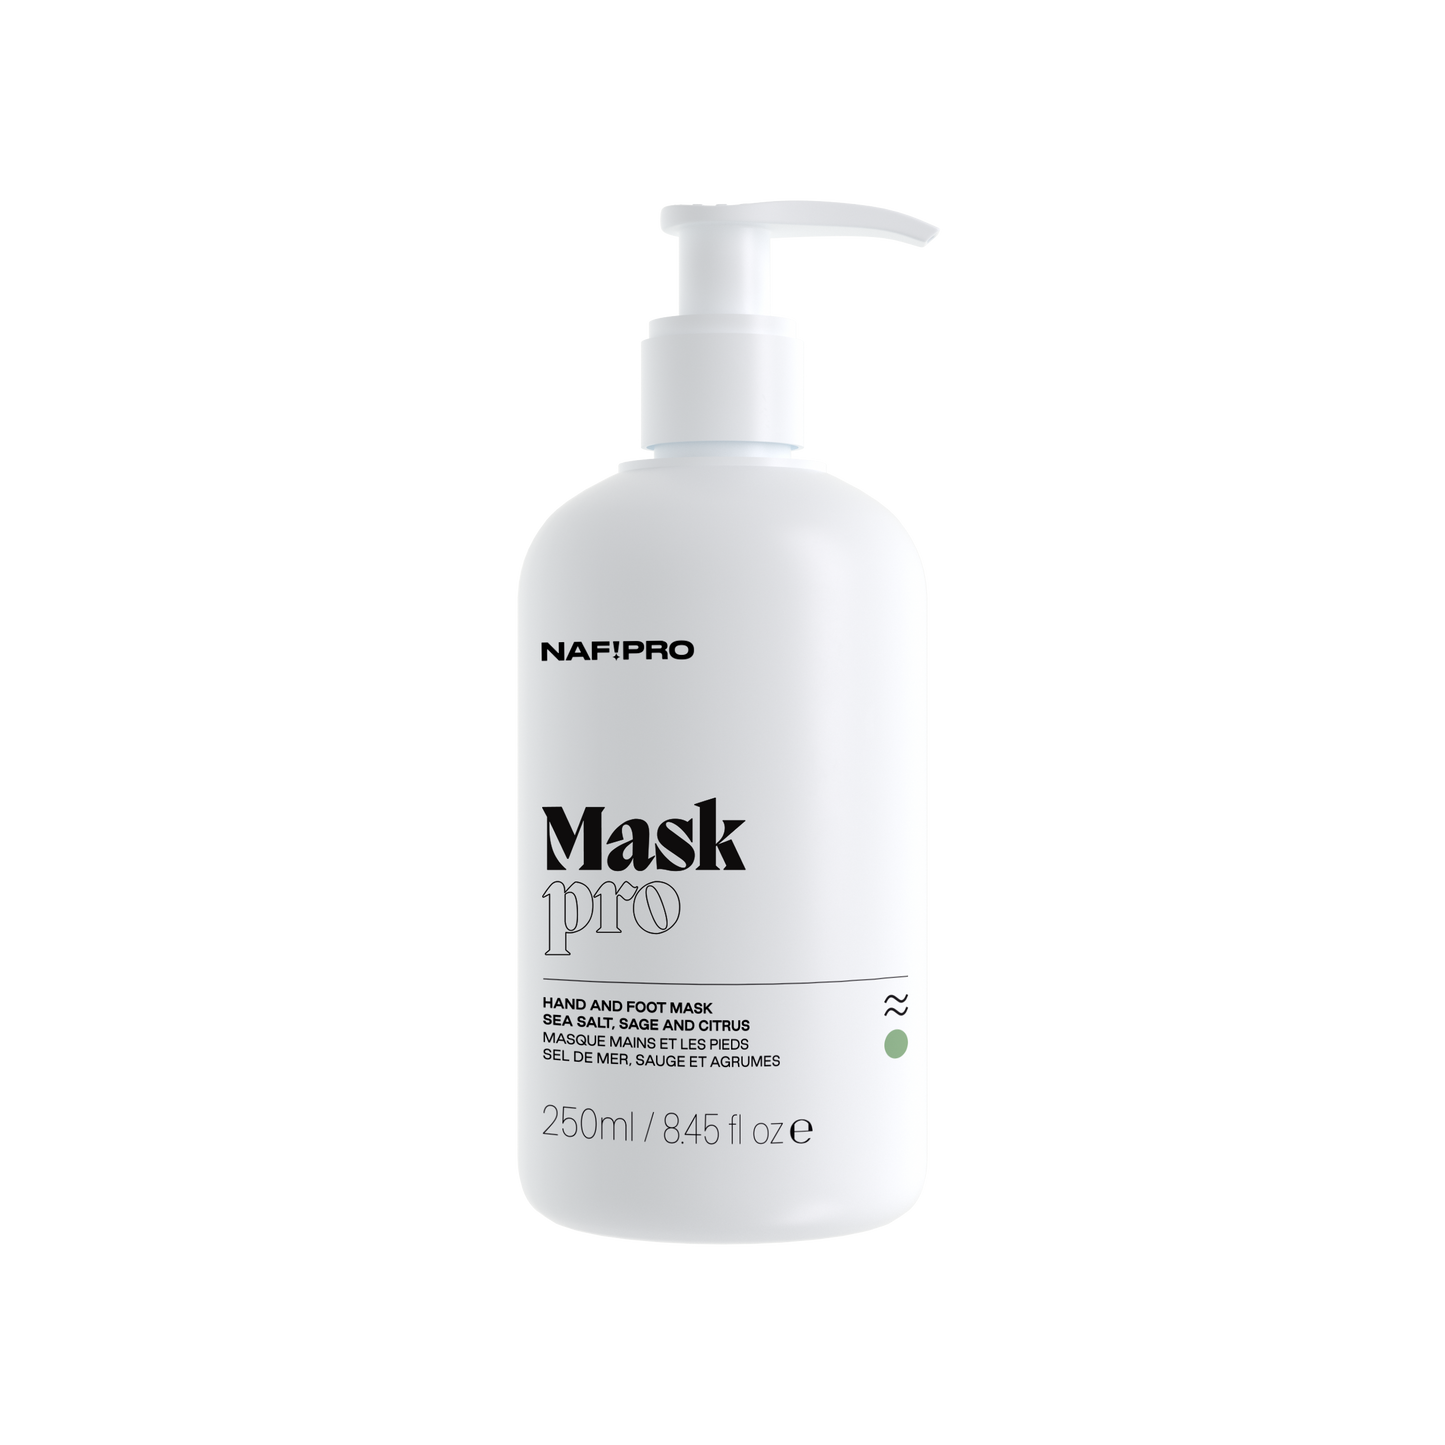 Mask Pro: Sea Salt, Sage & Citrus